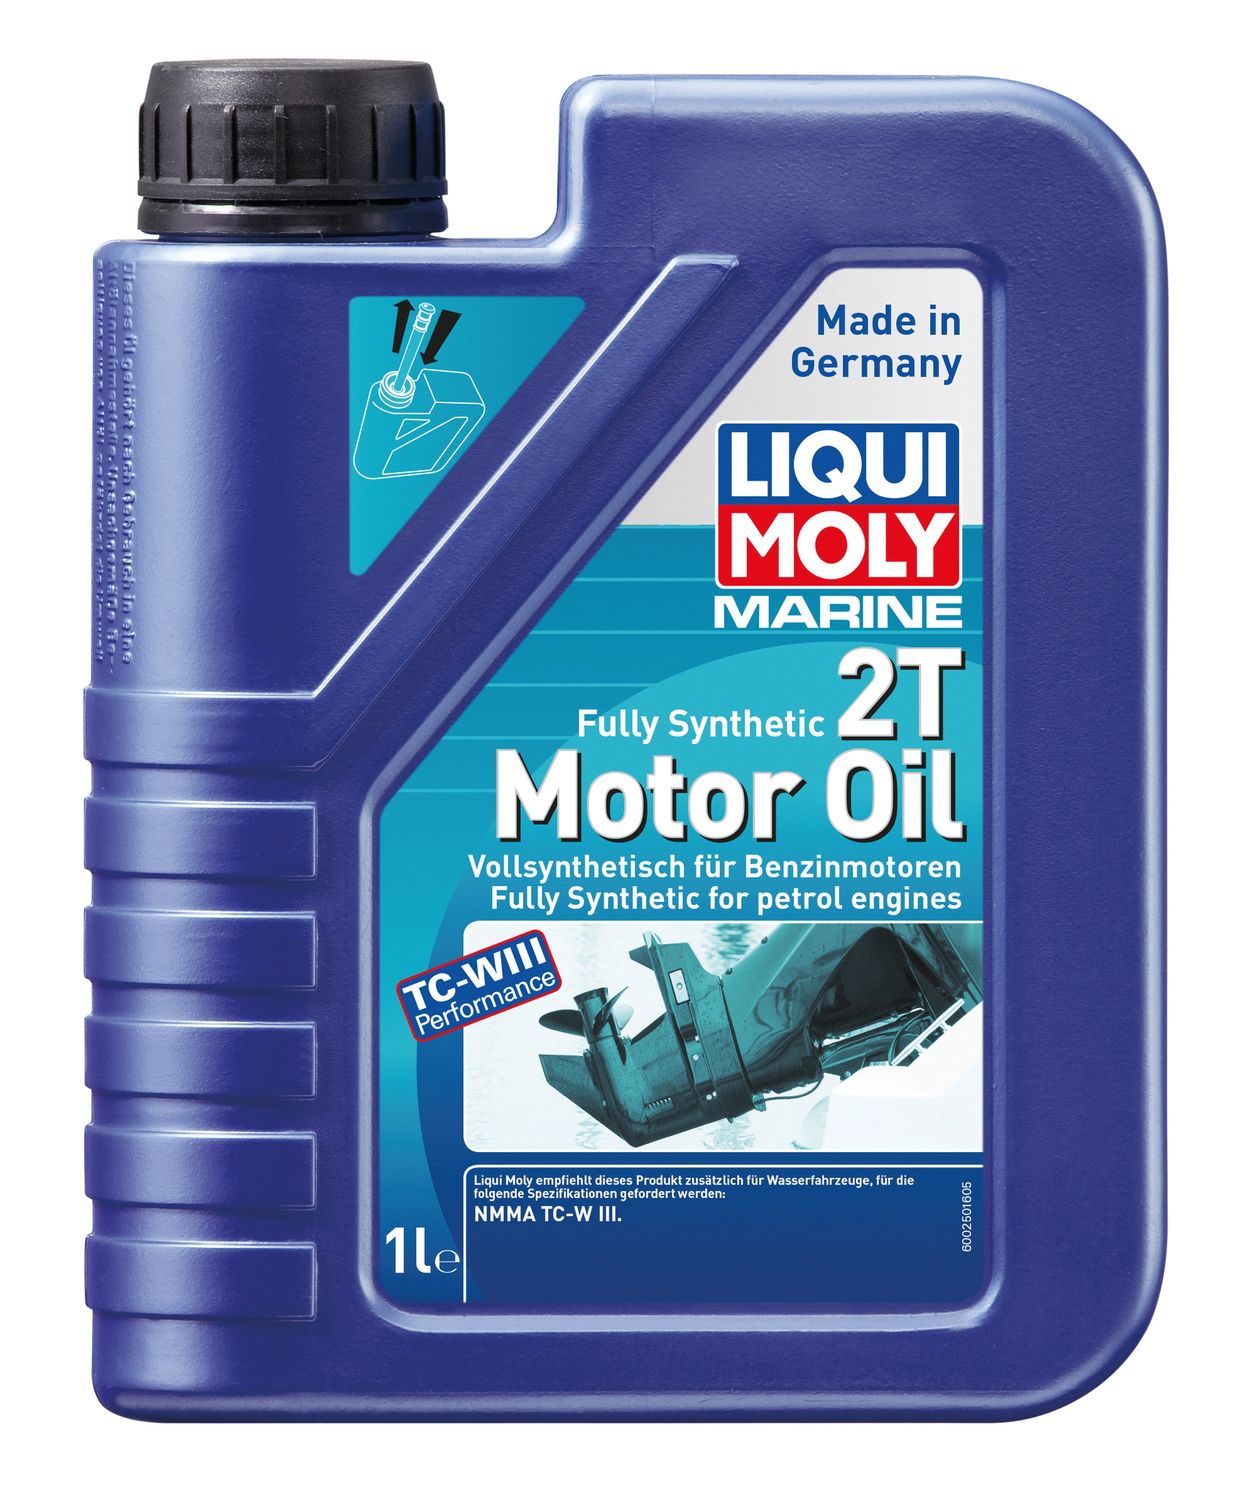 LIQUI MOLY Marine Fully Synthetic 2T Motor Oil 1l